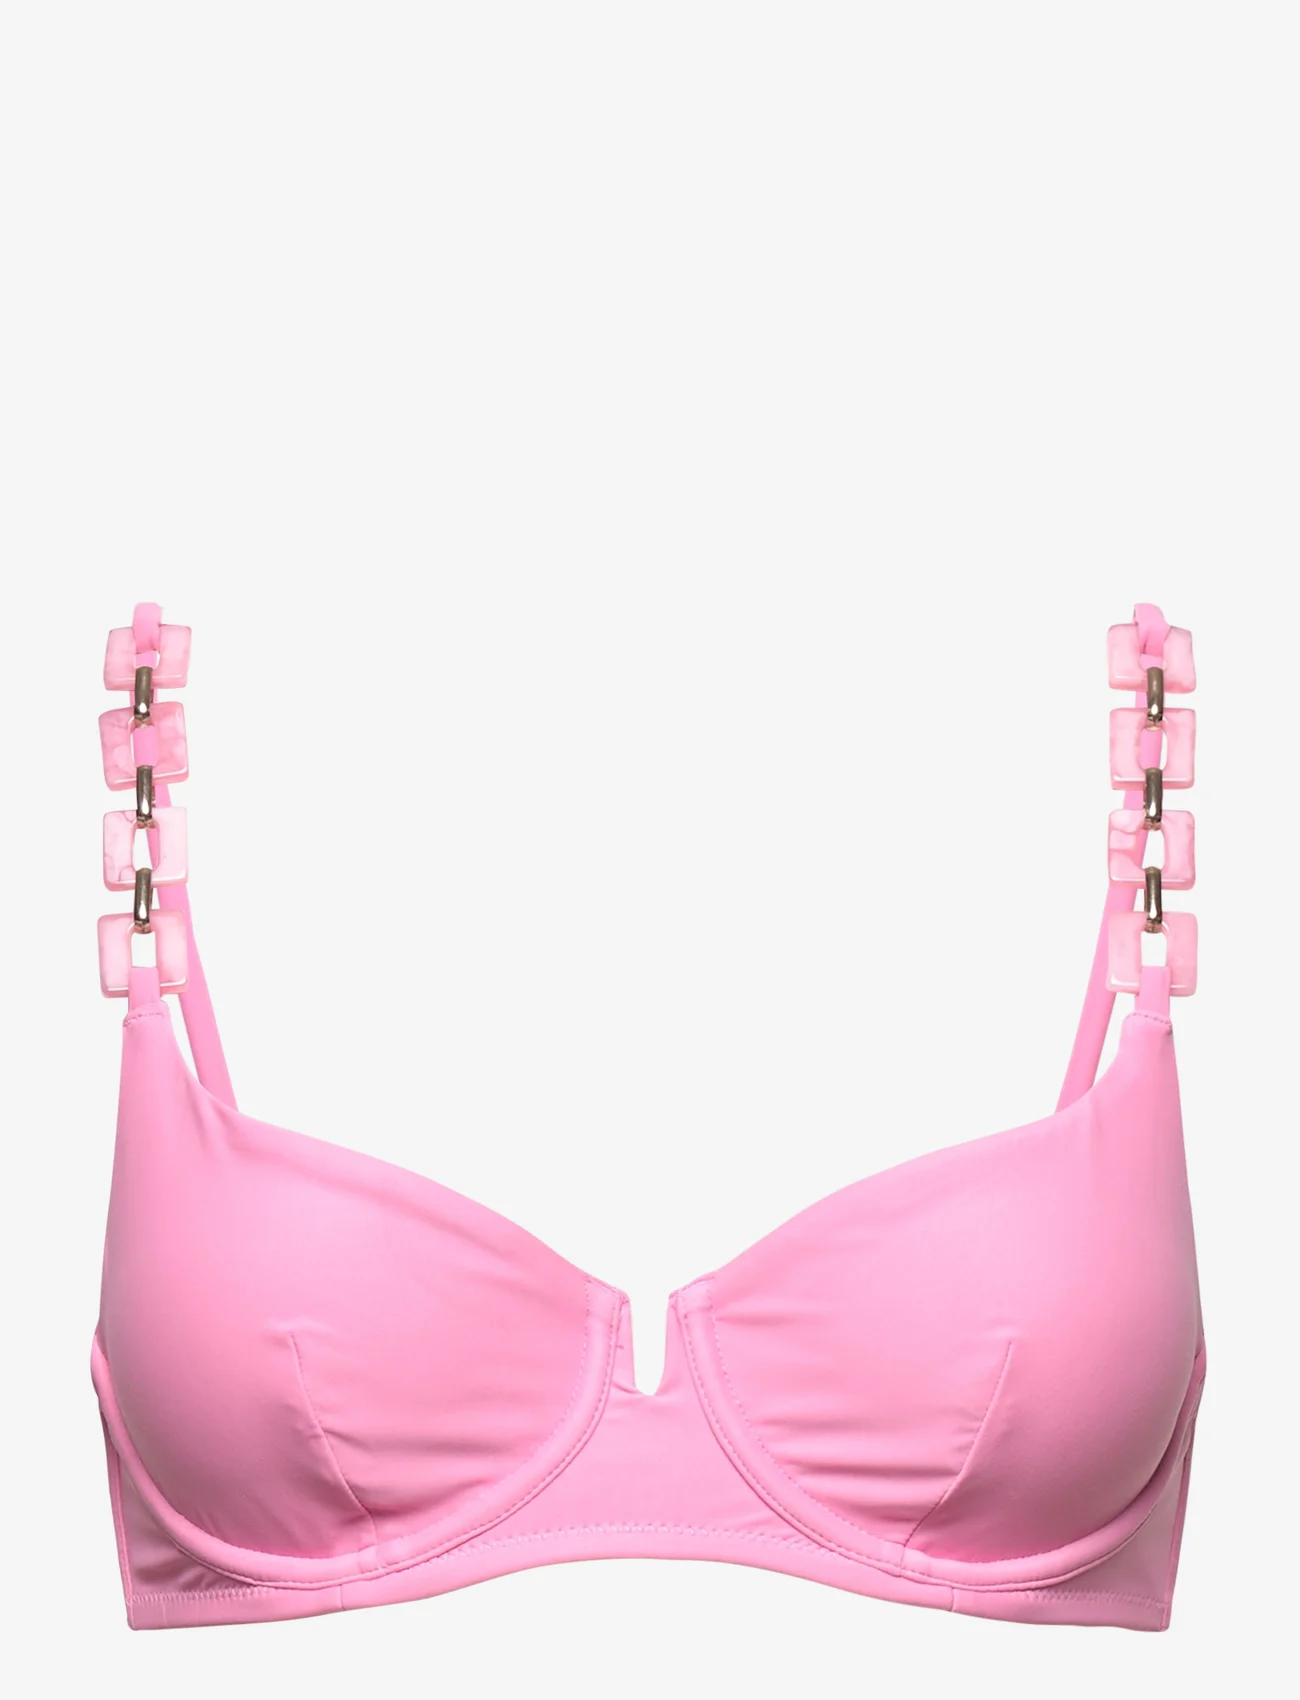 Hunkemöller - Aruba uf - bikinitoppe med bøjle - sea pink - 0